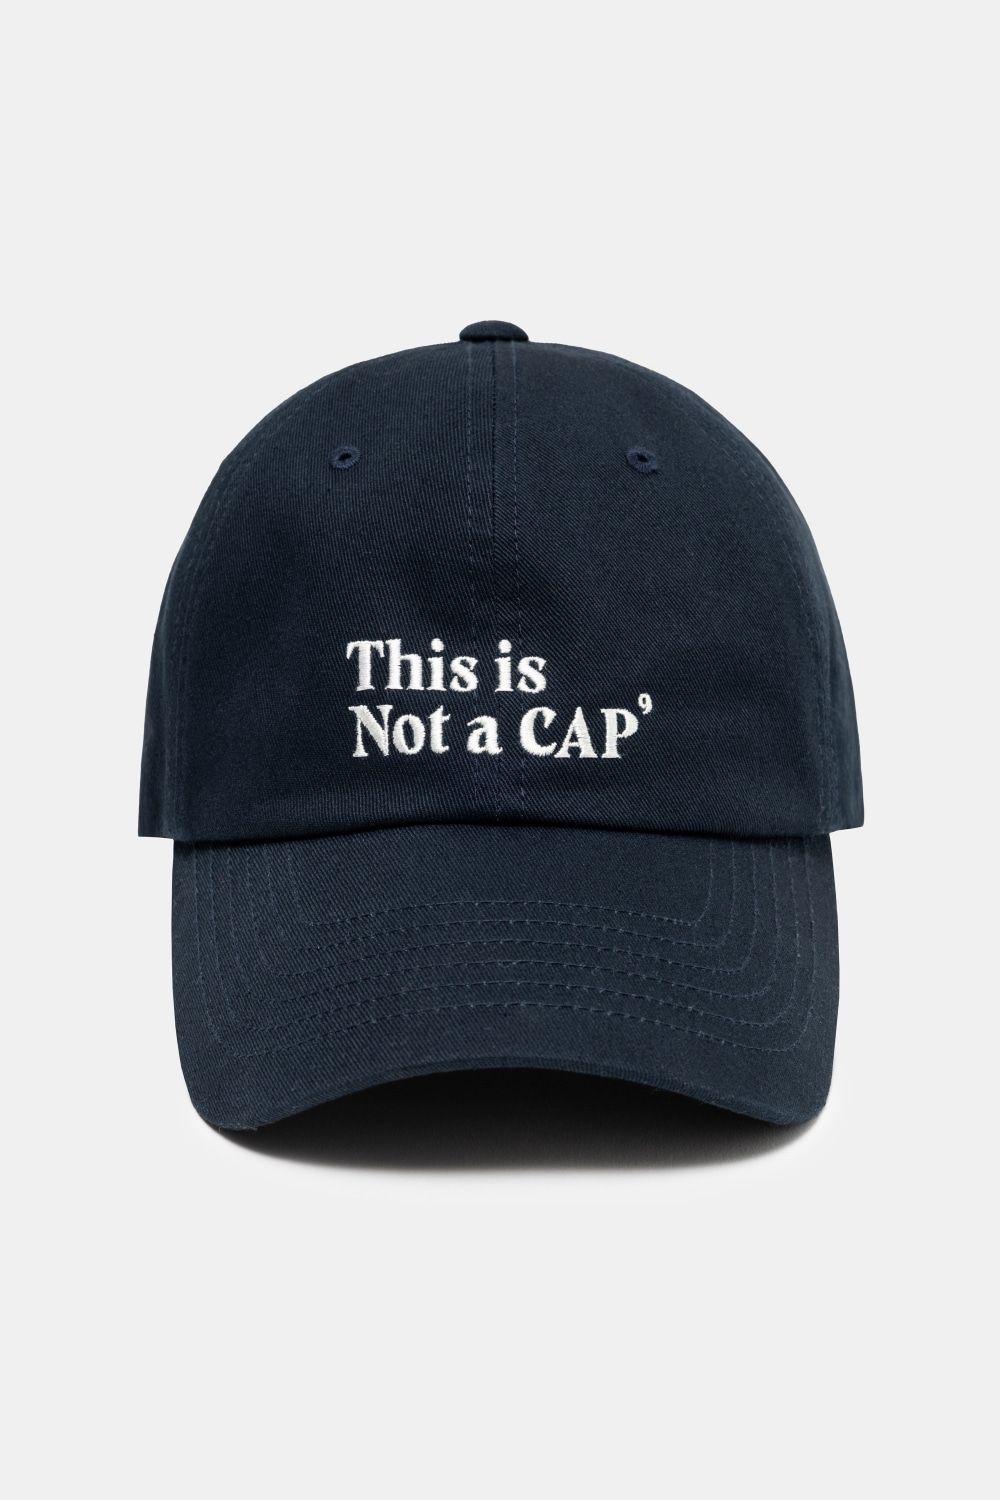 NOT A CAP_DARK NAVY